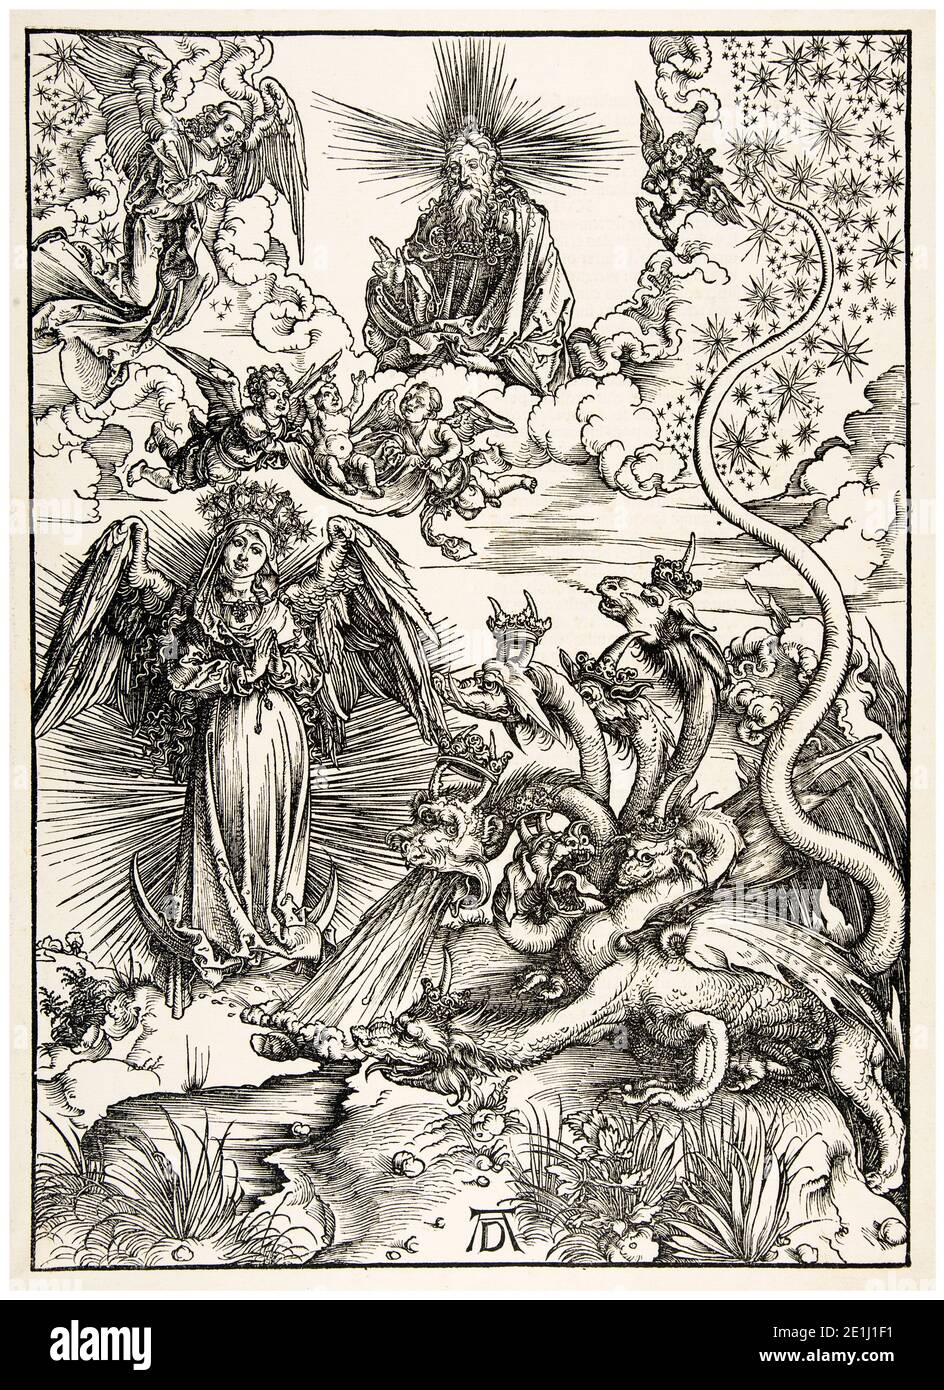 Albrecht Dürer, The Apocalypse: The Sun Woman and the Seven-Headed Dragon (The Apocalyptic Woman), woodcut print, 1498 Stock Photo